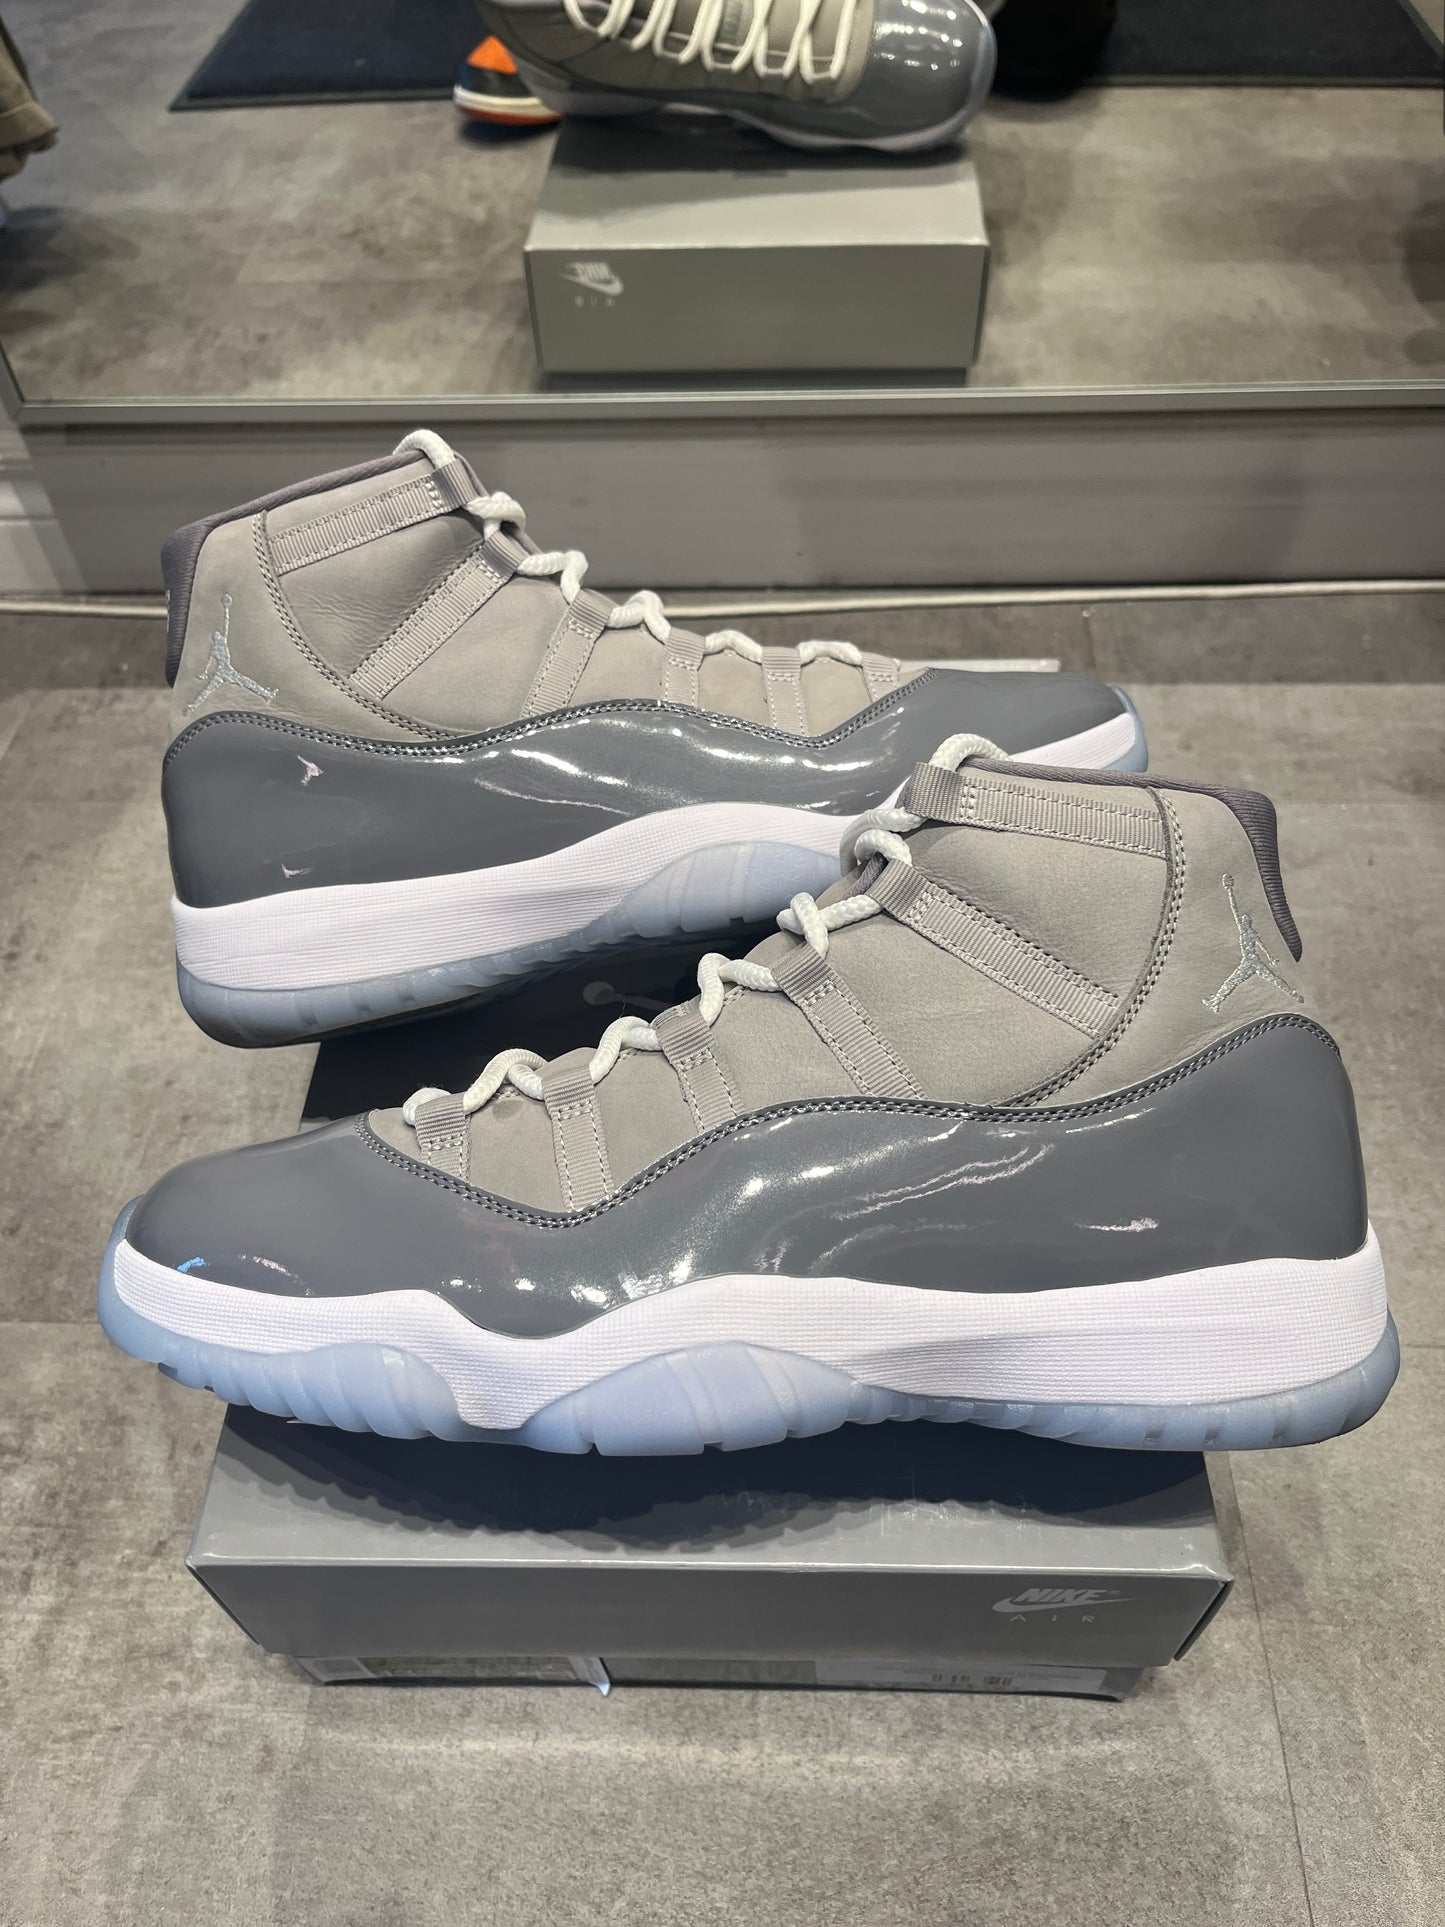 Jordan 11 Retro Cool Grey (2021) (Preowned Size 13)